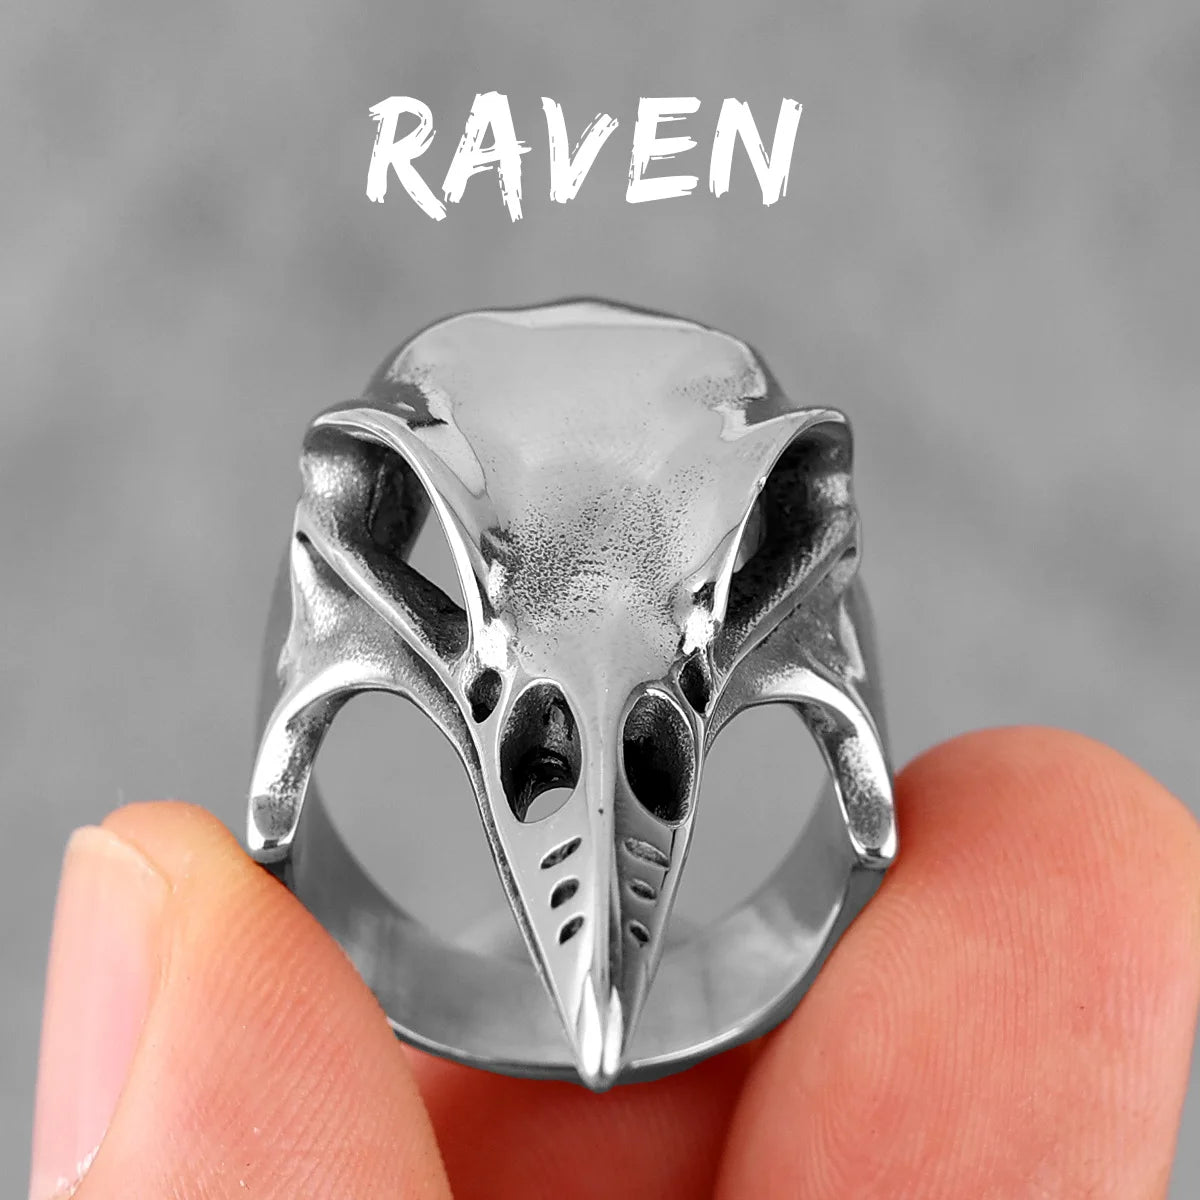 Viking Raven Skull Stainless Steel Mens Rings Punk Amulet Gothic for Male Boyfriend Biker Jewelry Creativity Gift R705-Silver